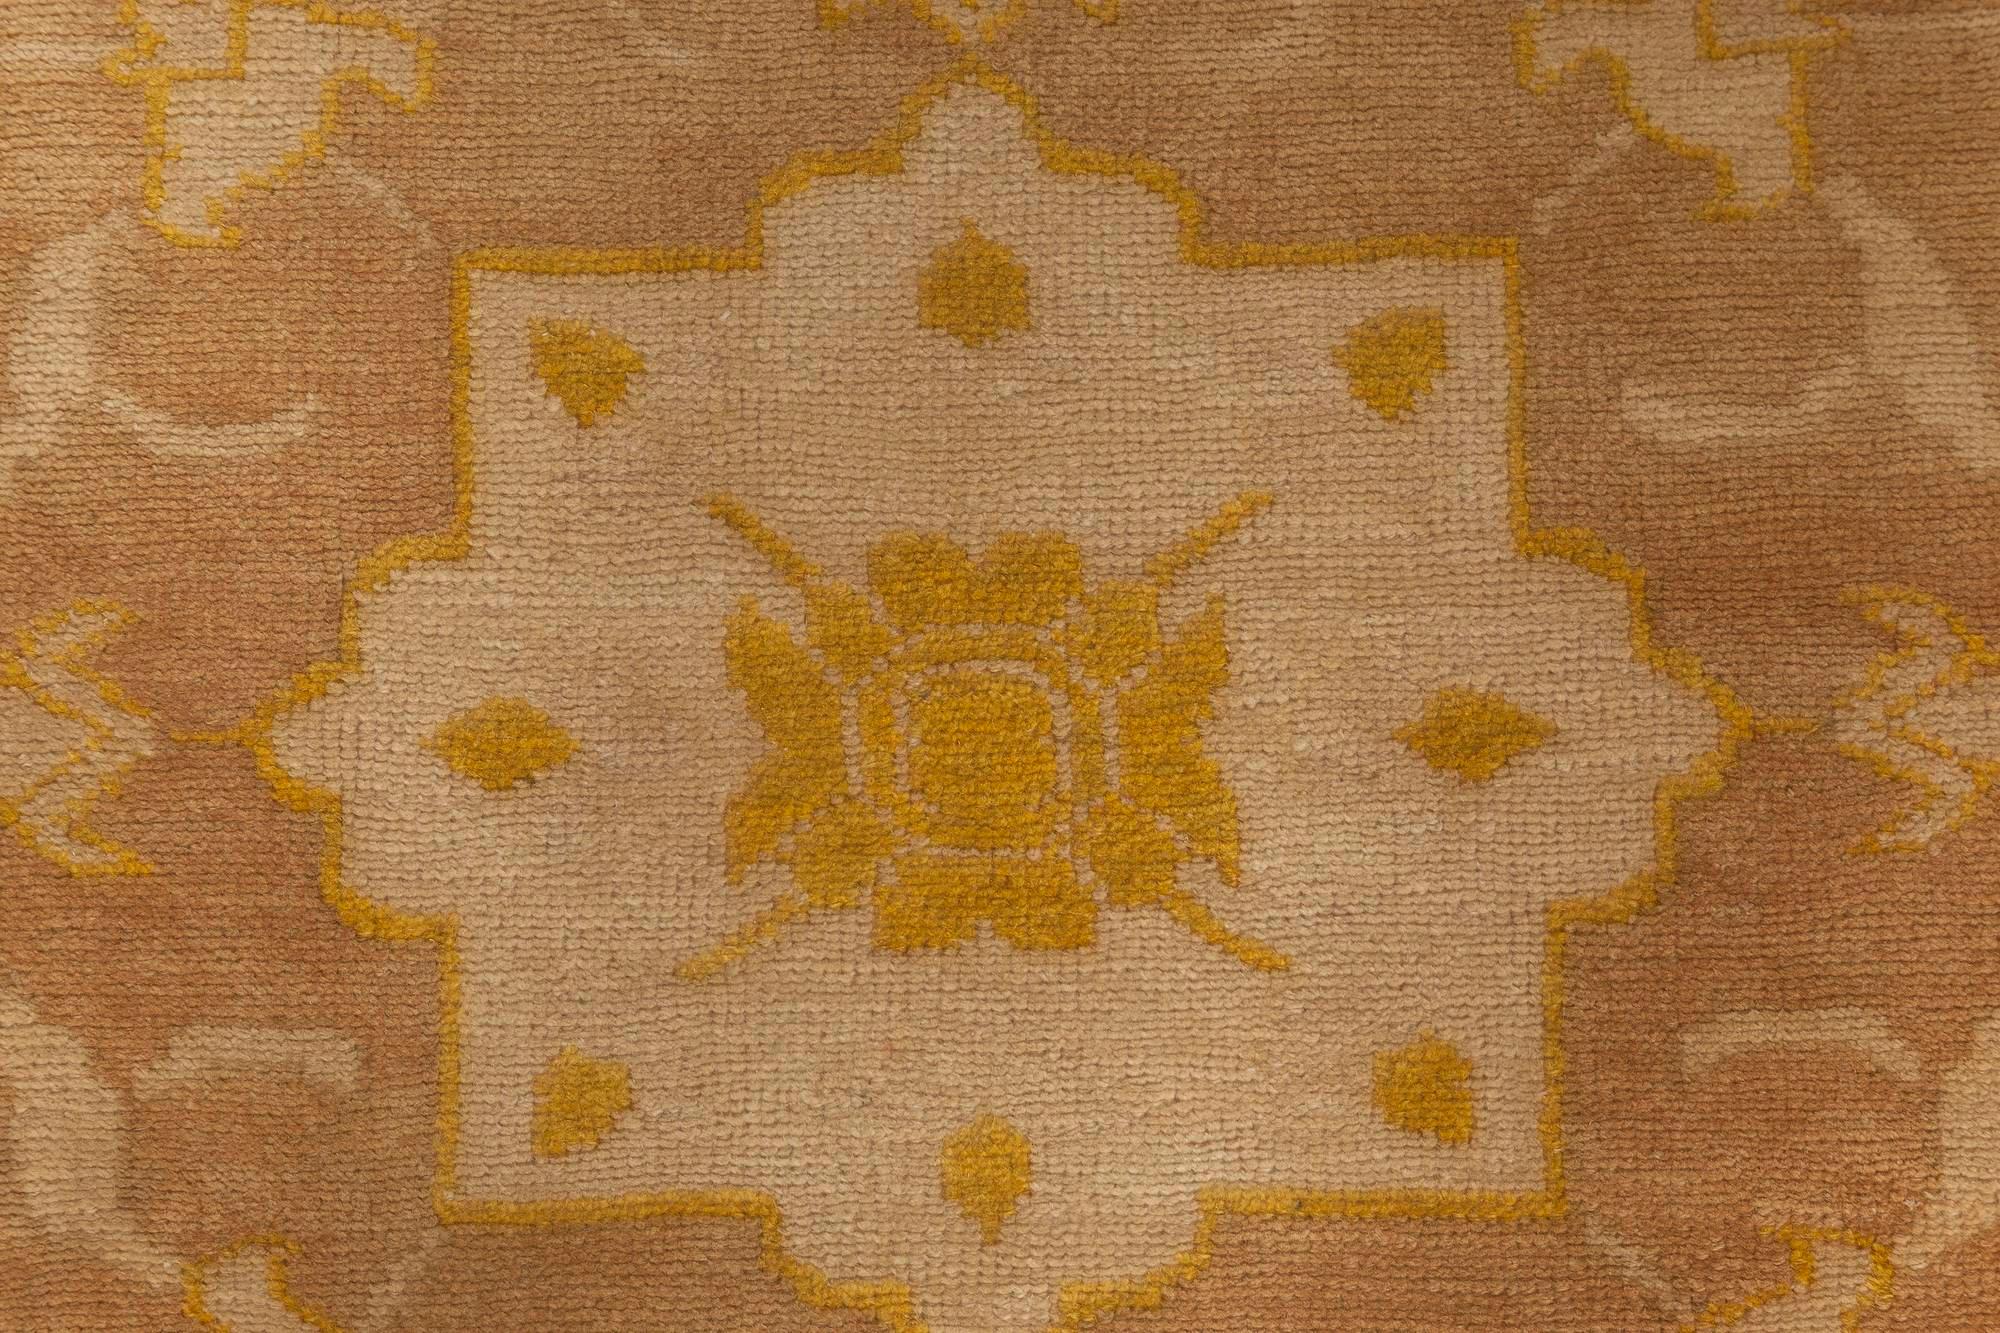 Contemporary oversized Egyptian rug by Doris Leslie Blau
Size: 14'6